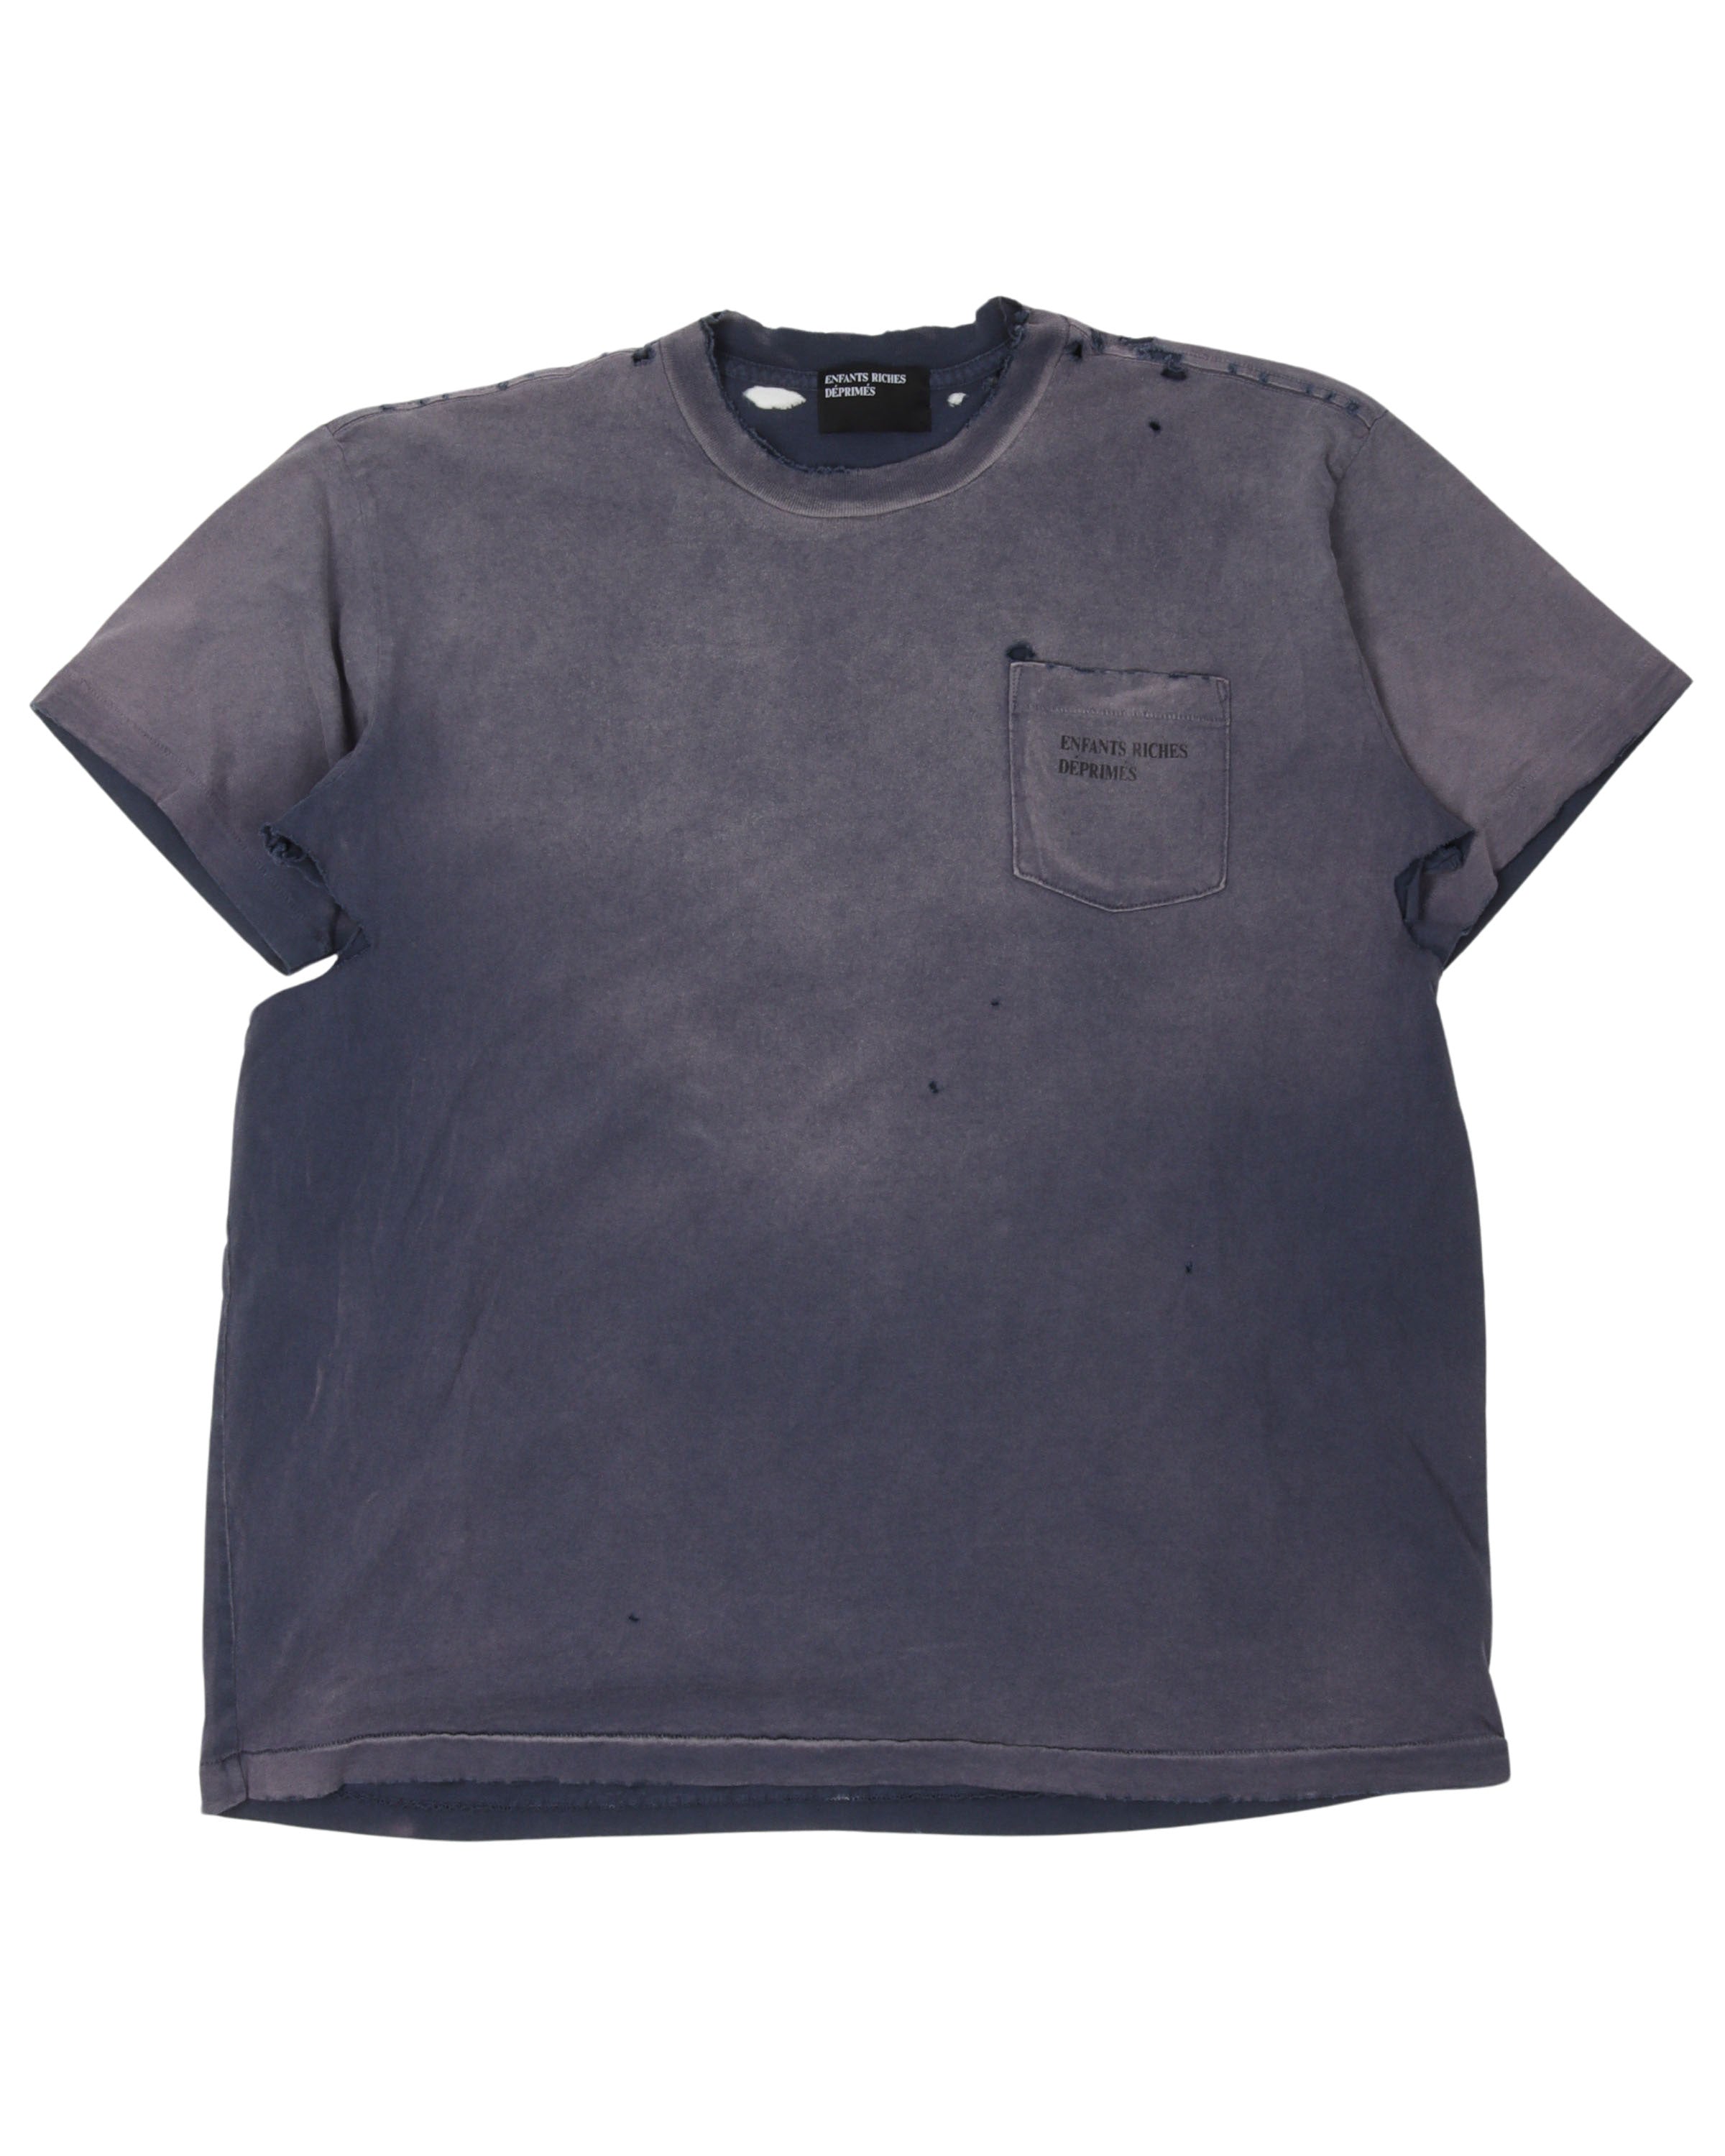 Distressed Fade Pocket T-Shirt